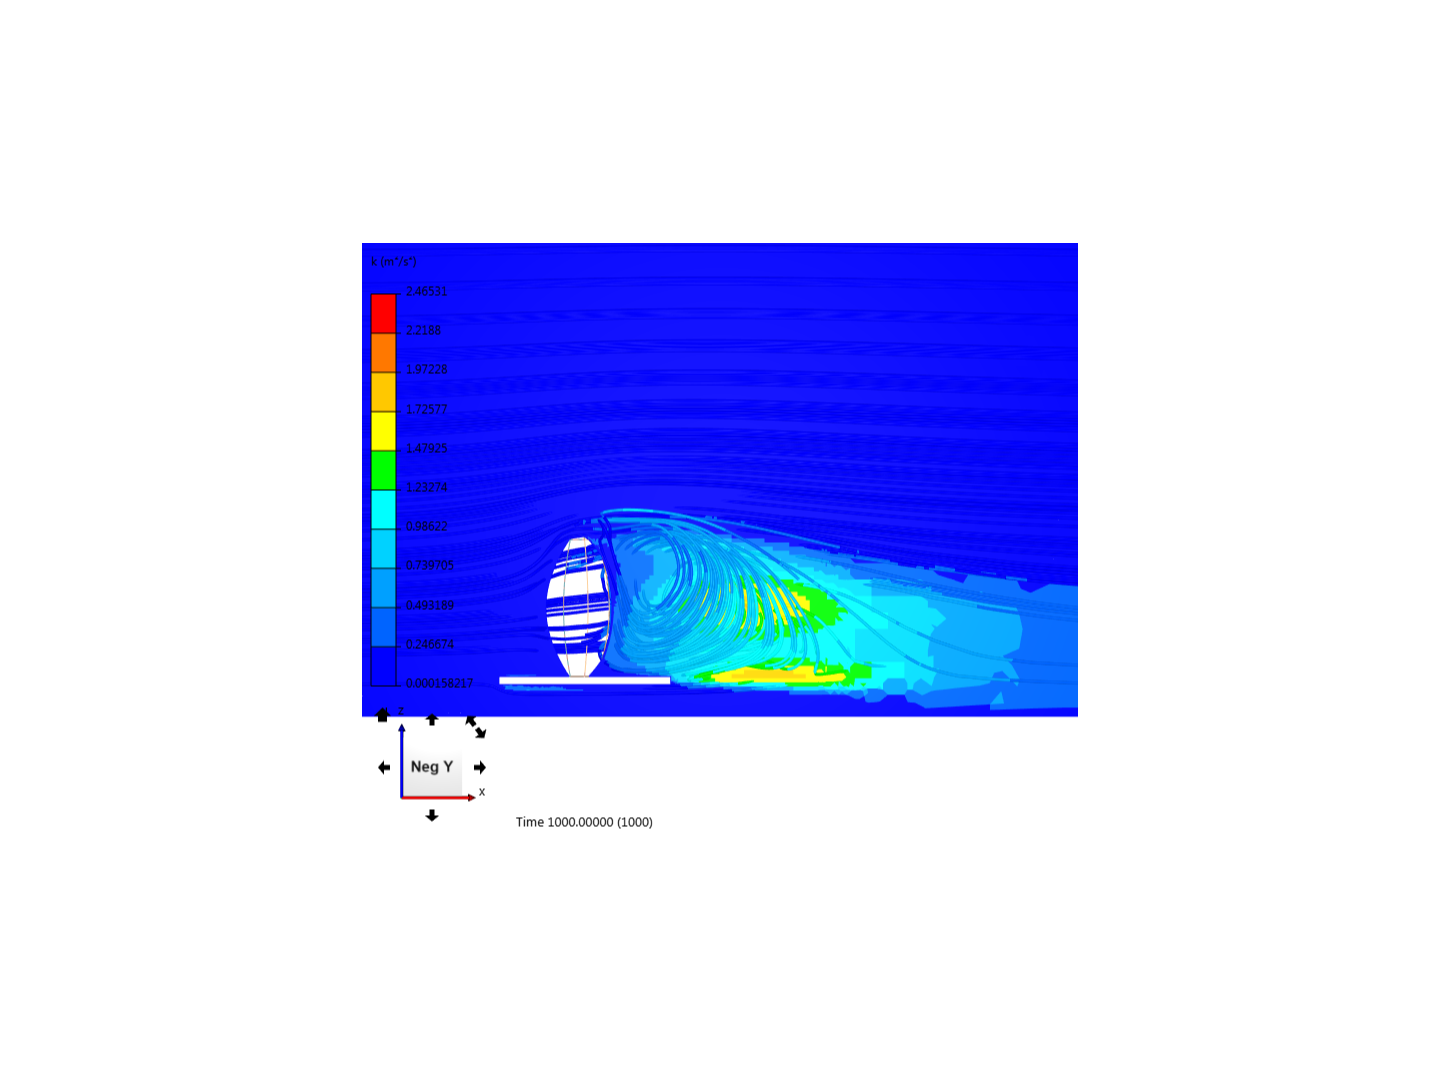 test wind analysis image